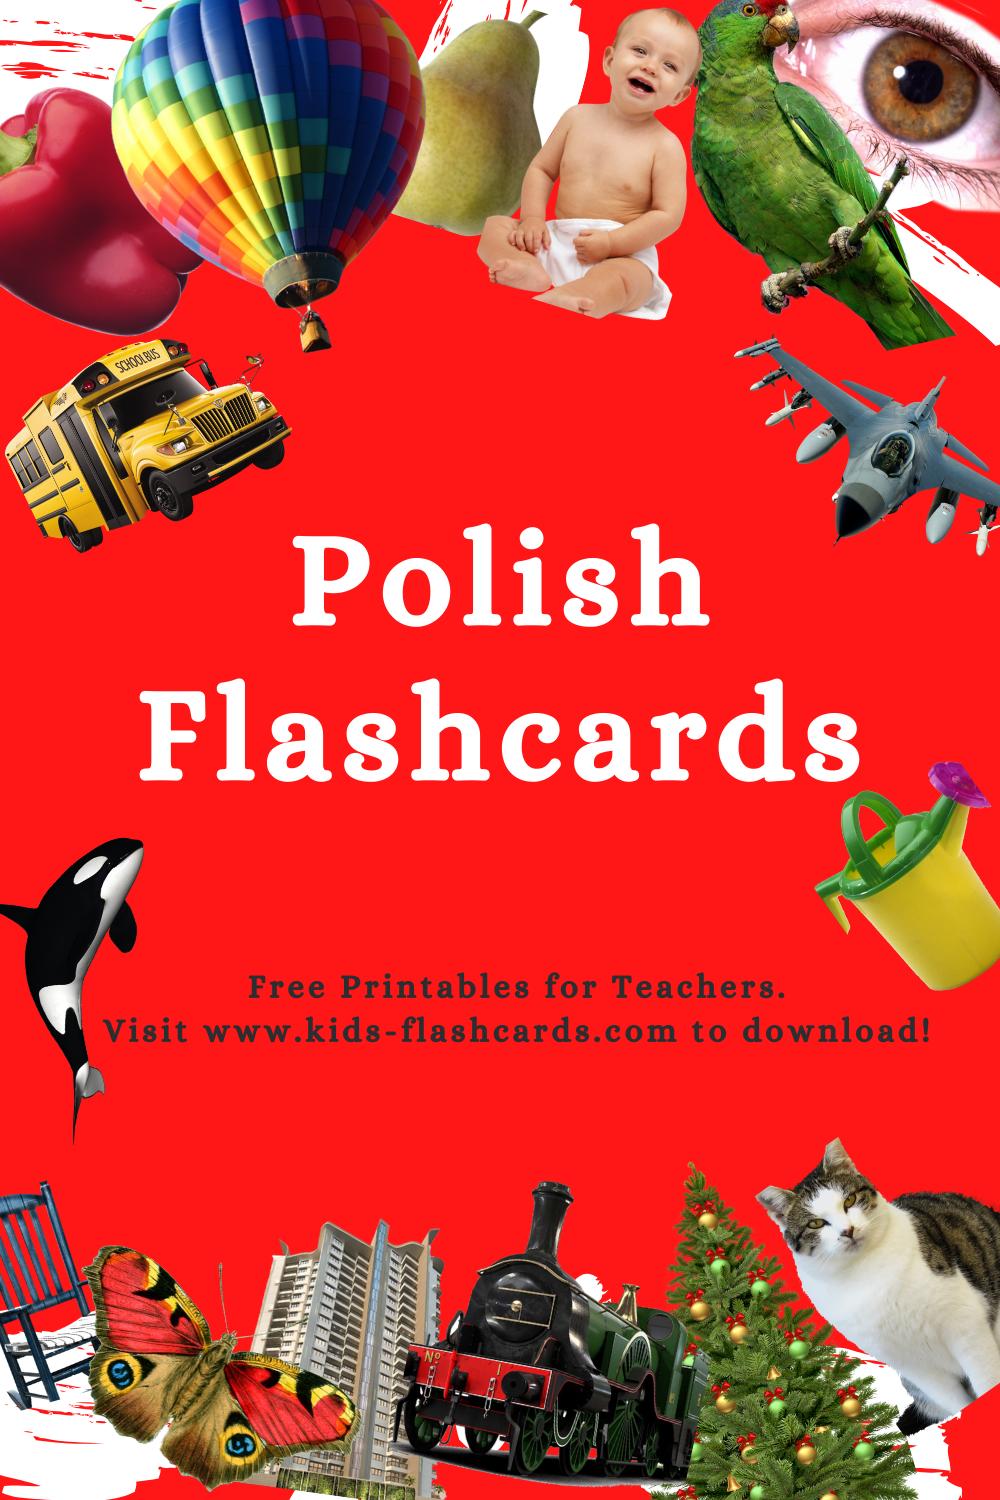 Worksheets to learn Polish language